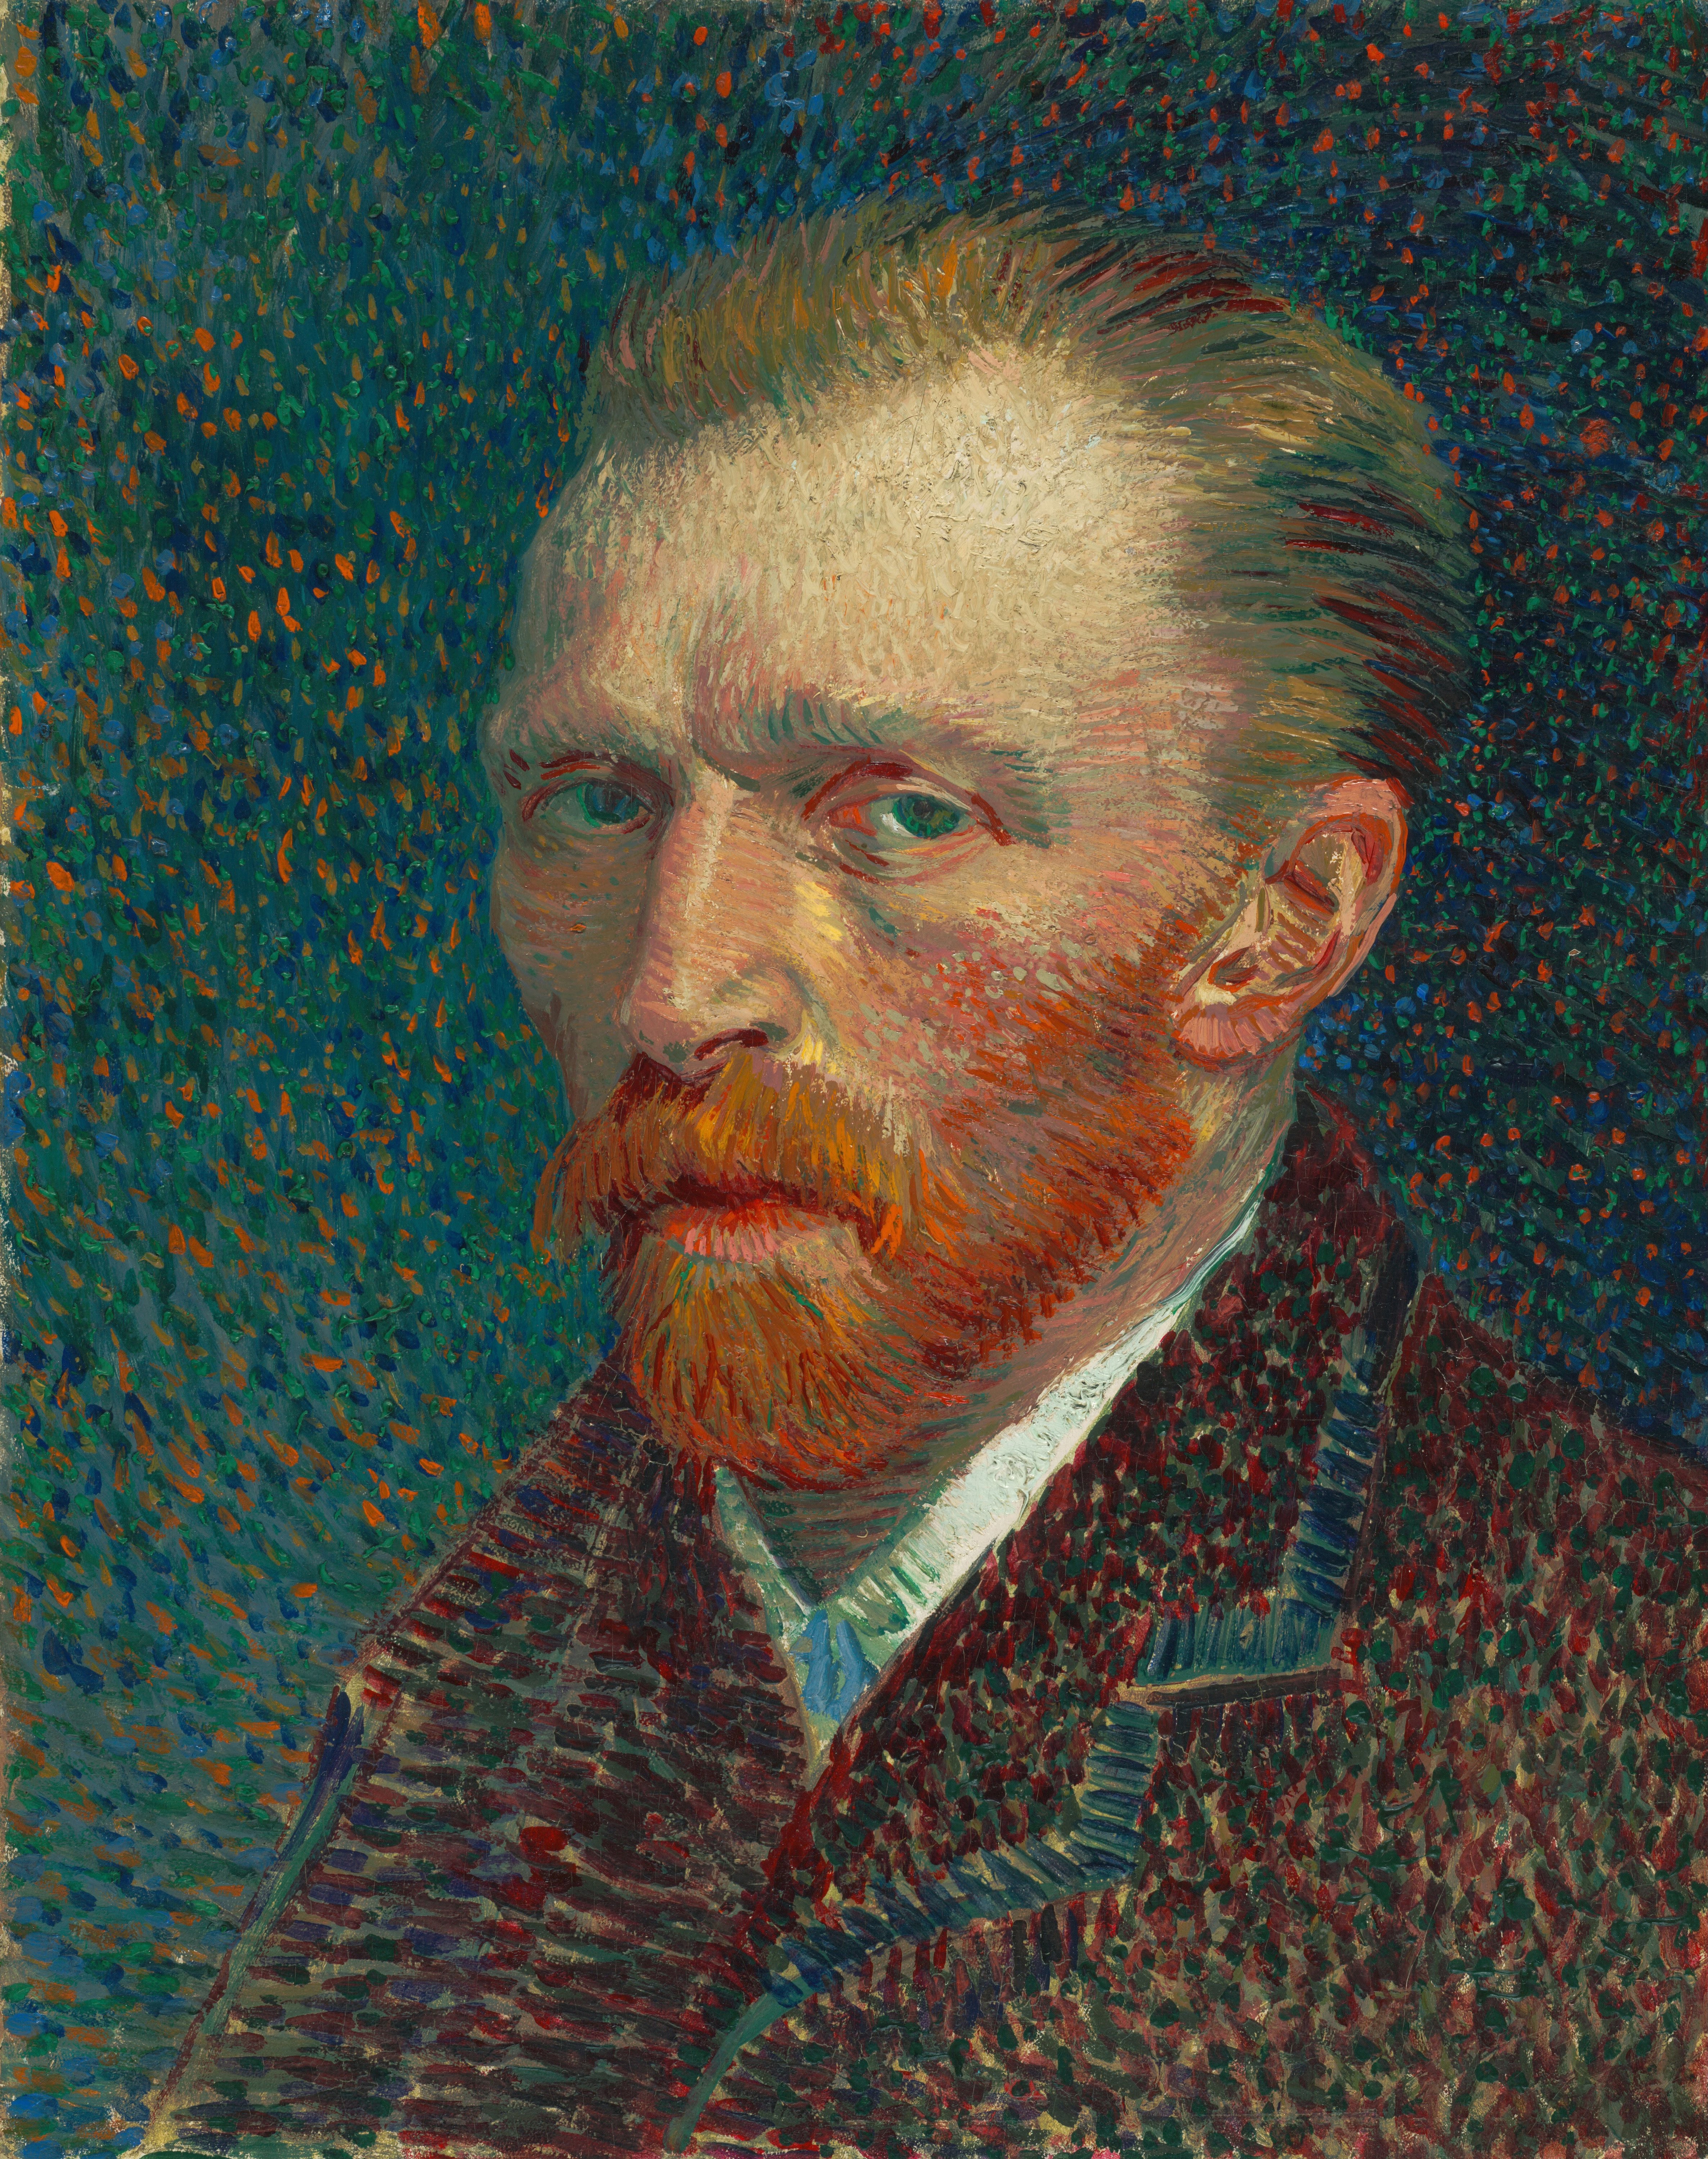 Self-Portrait (1887).
